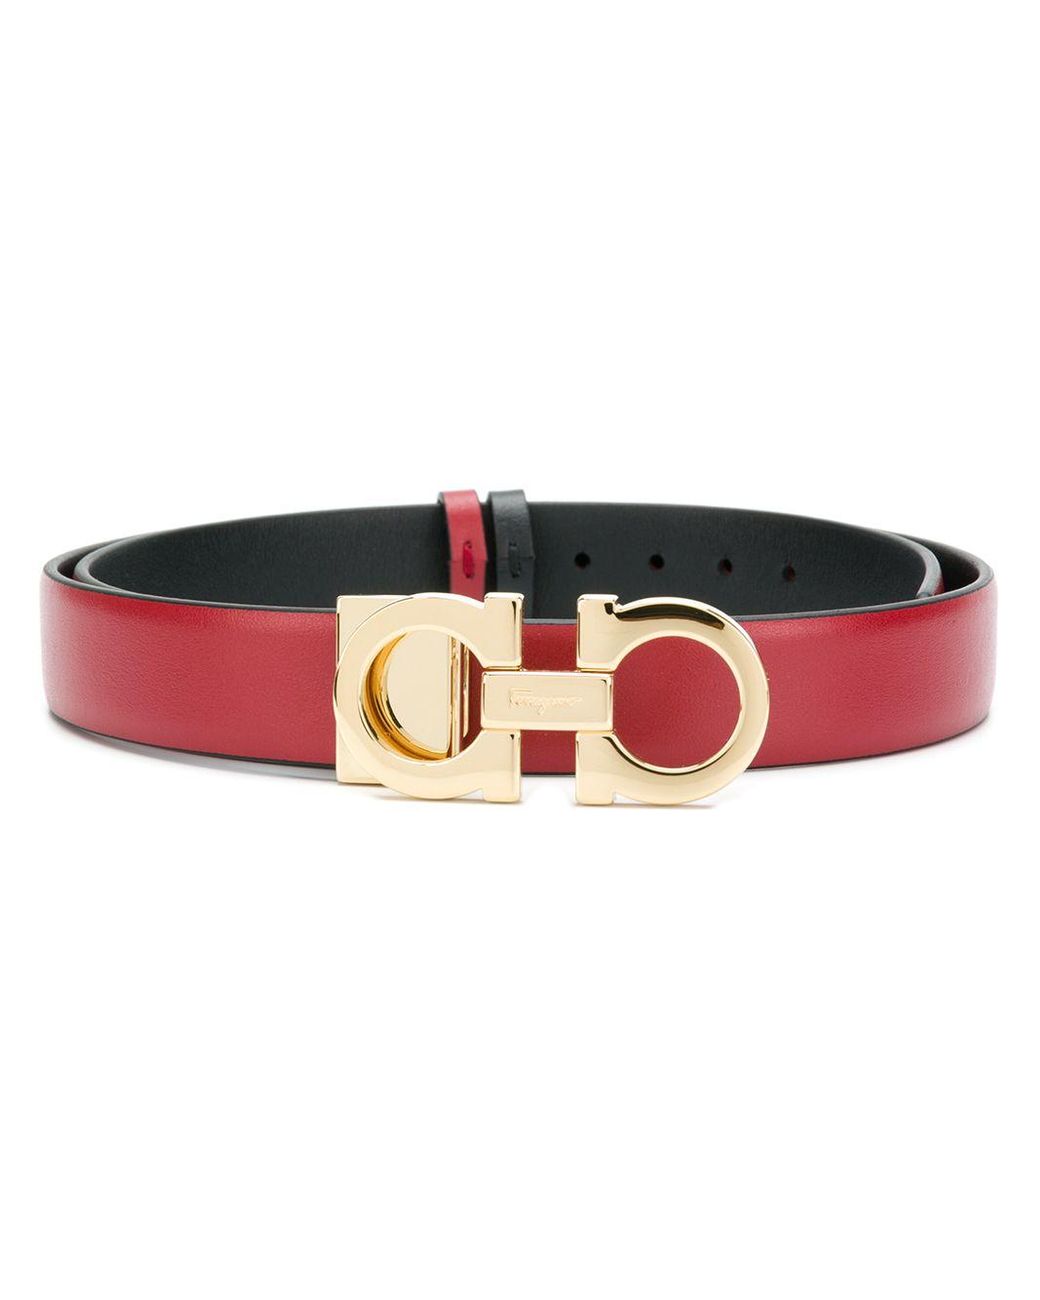 Ferragamo Leather Gancio Reversible Belt in Red - Save 22% - Lyst